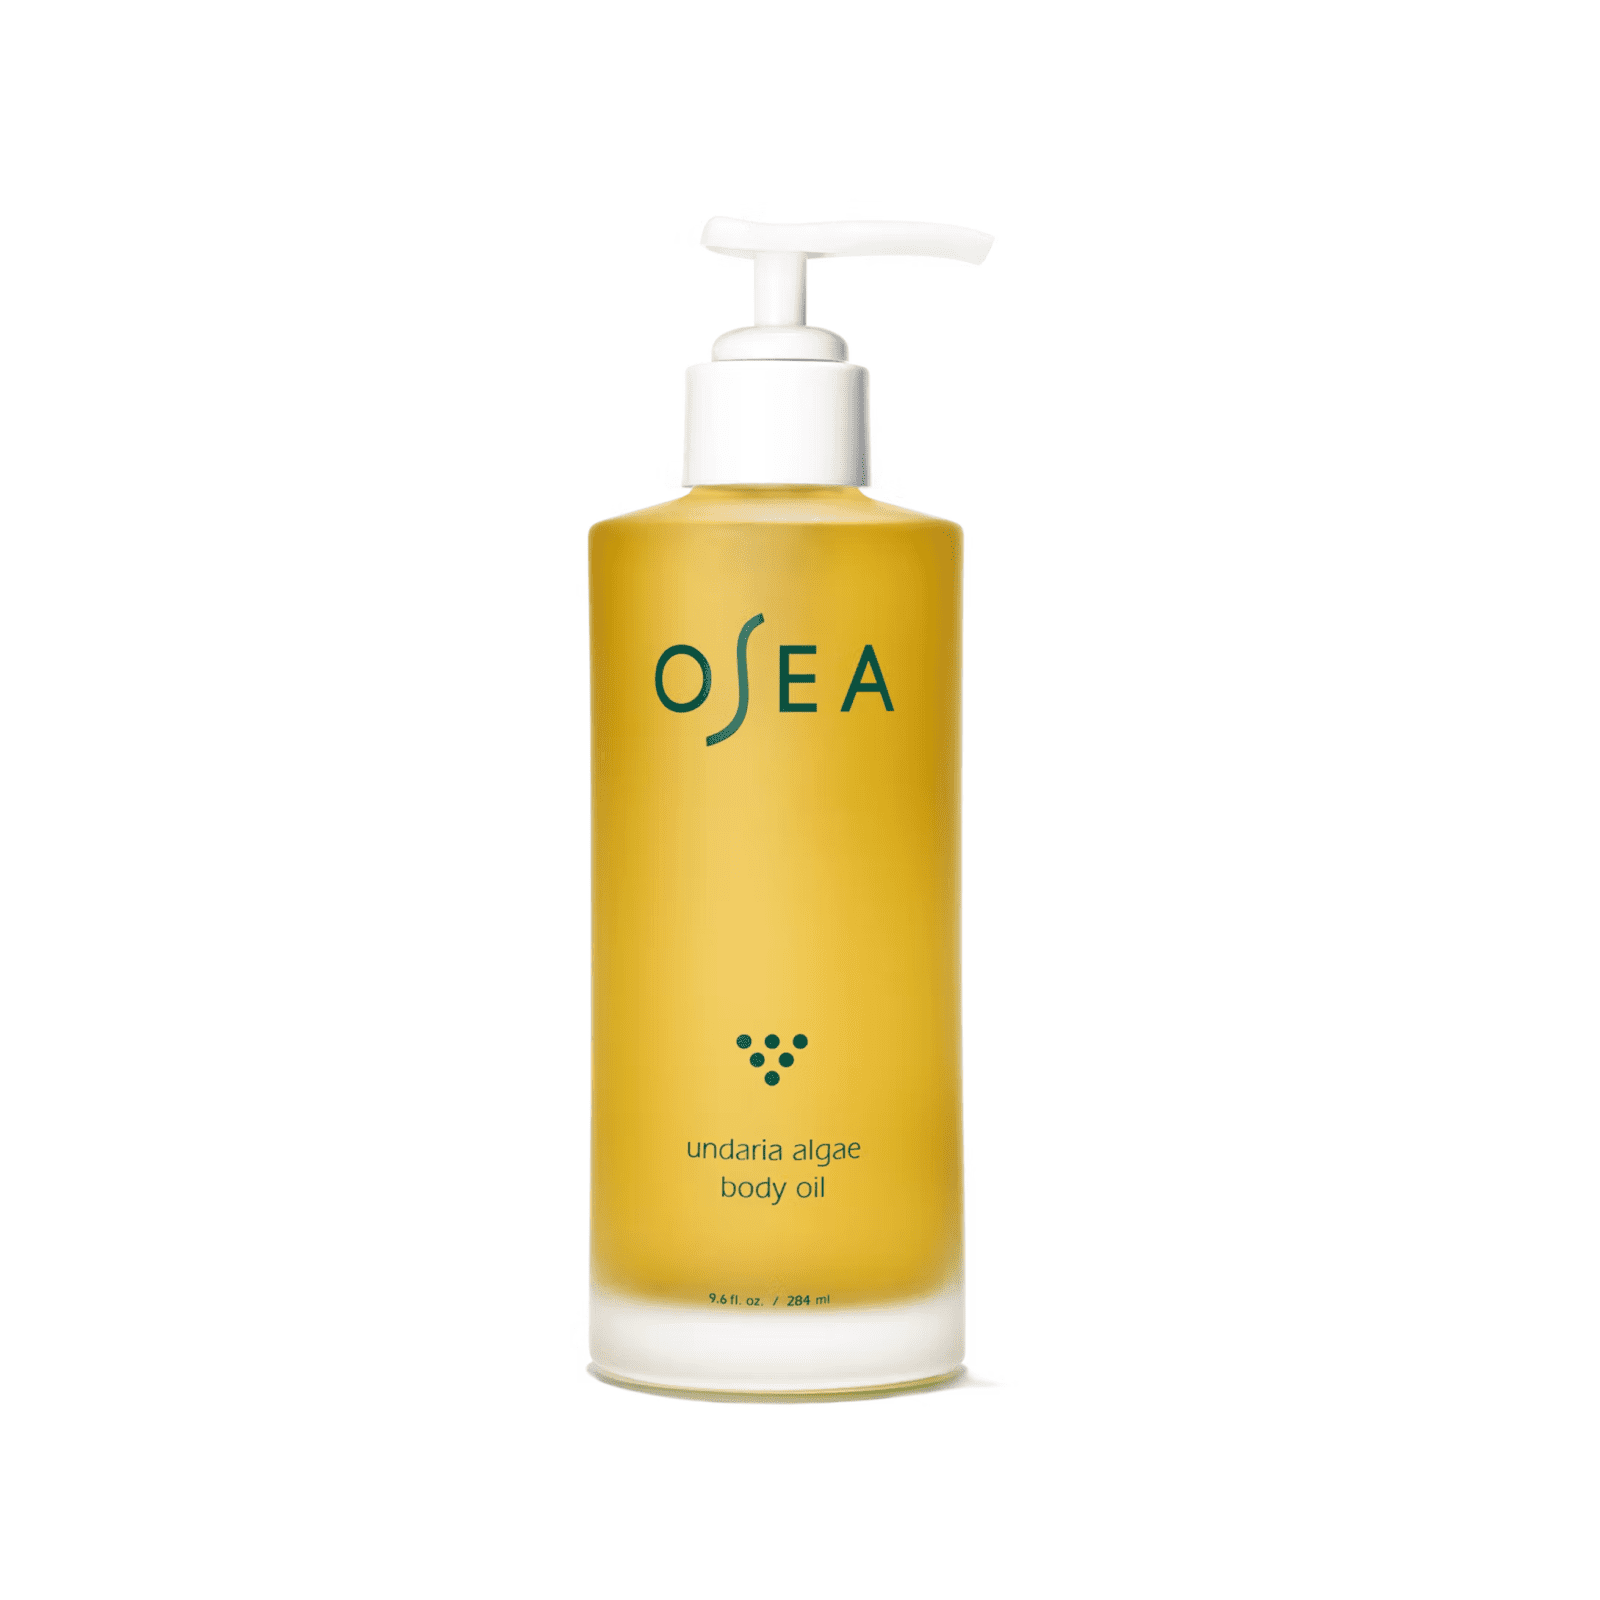 Beauty Product Samples We Loved: OSEA Undaria Algae Body Oil